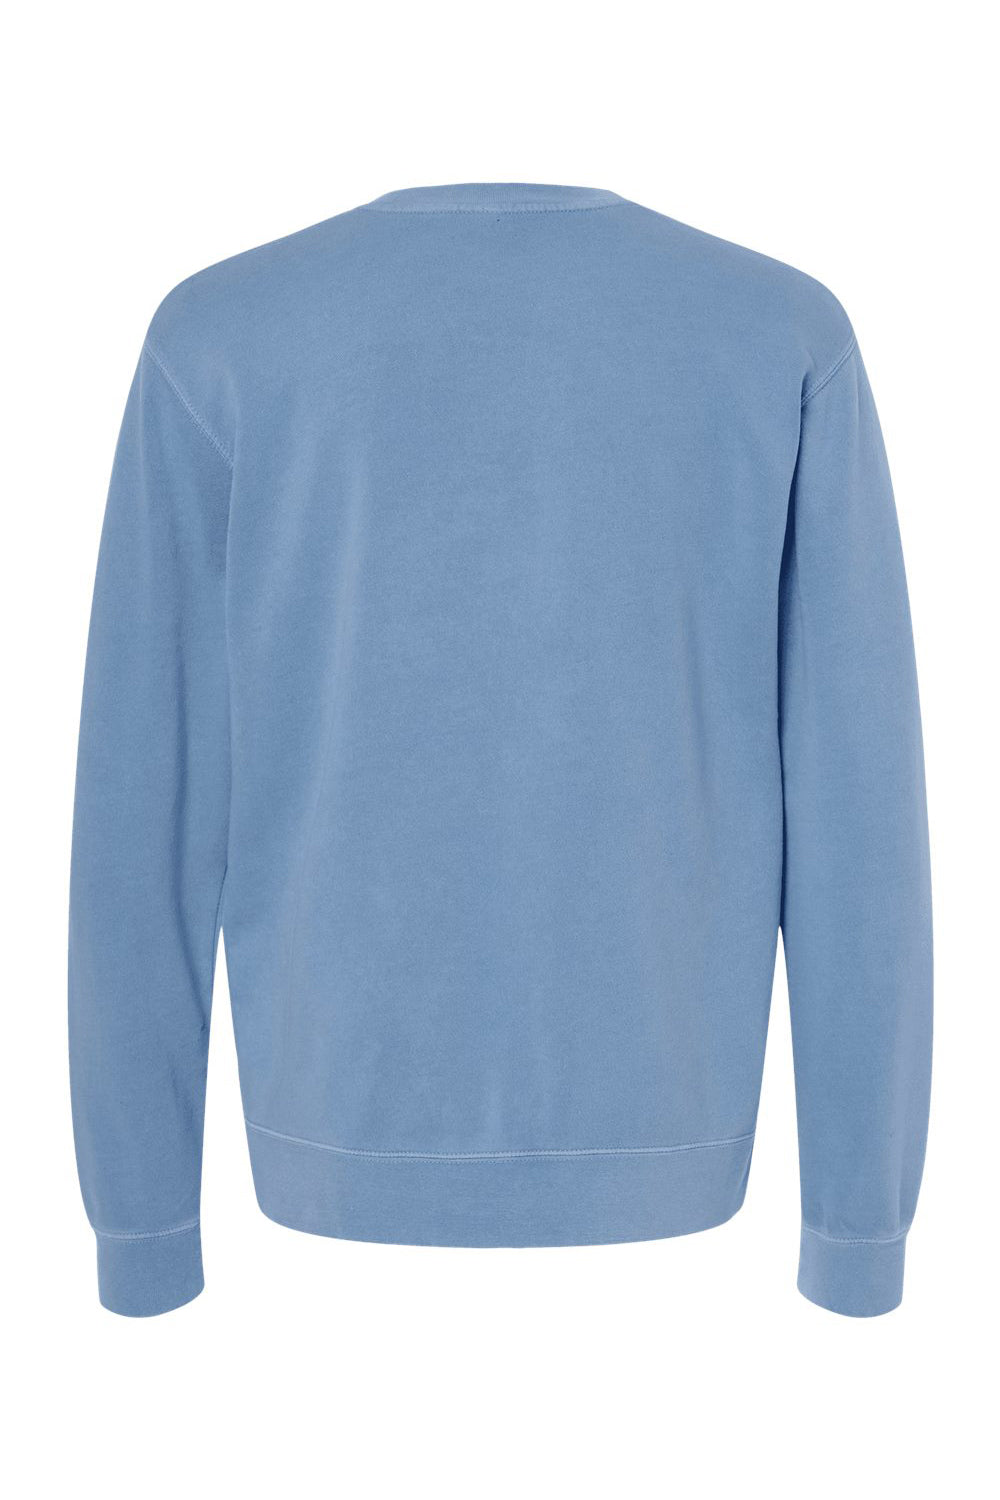 Independent Trading Co. PRM3500 Mens Pigment Dyed Crewneck Sweatshirt Light Blue Flat Back